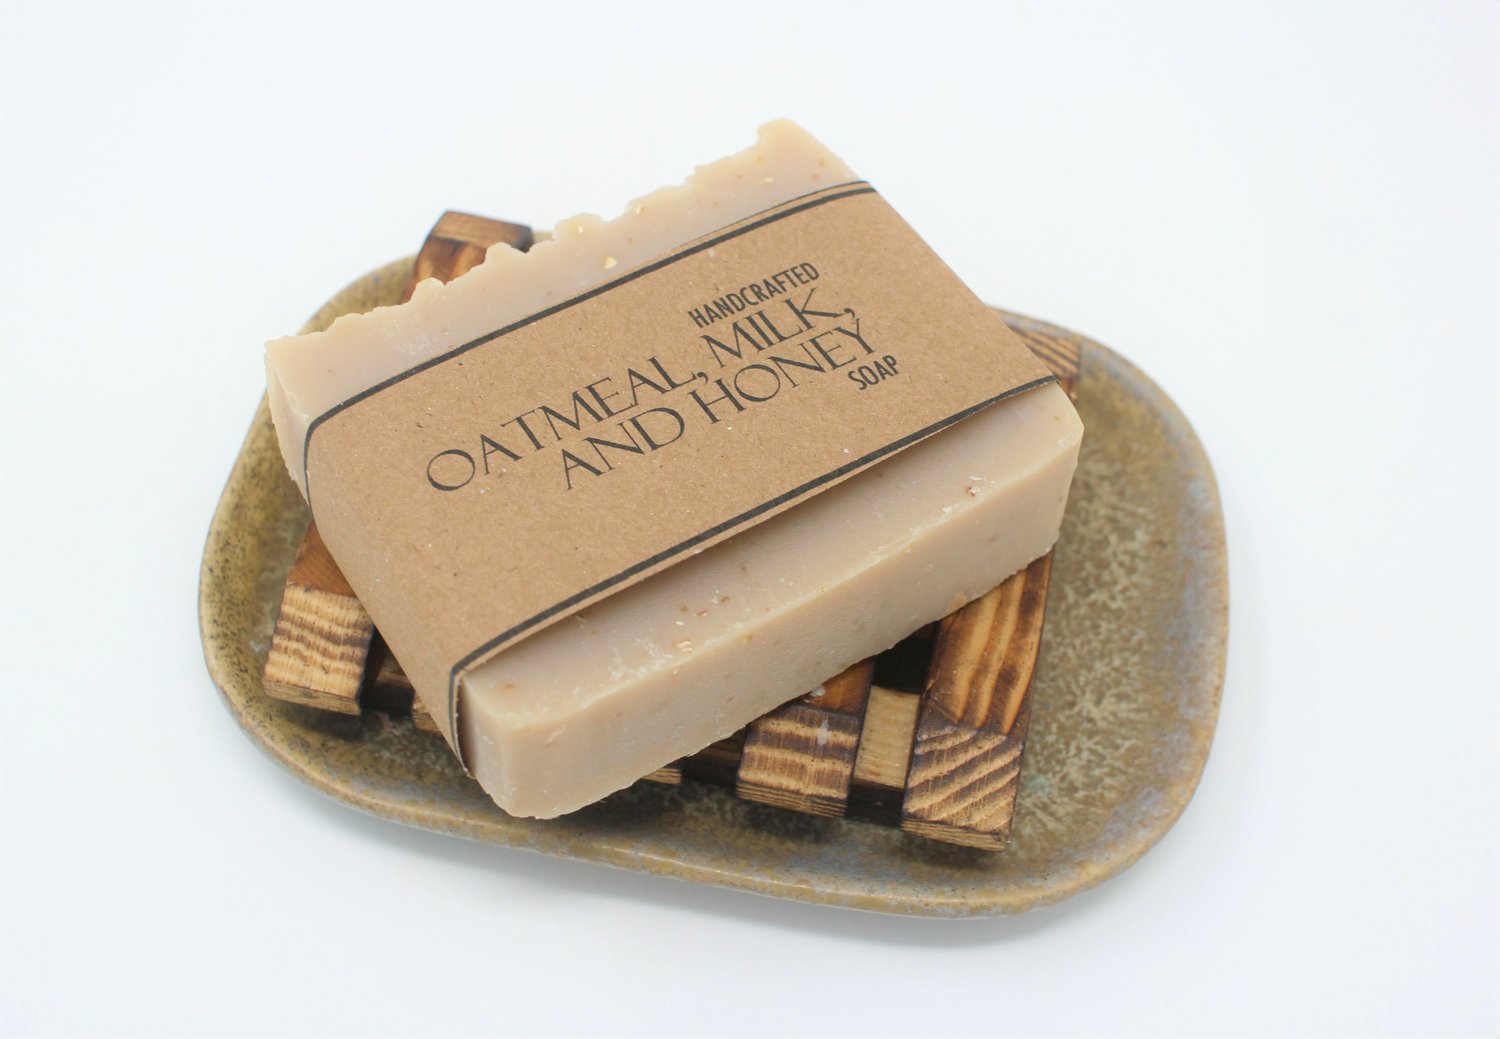 Honey & Oats Olive Oil Soap - Frankincense and Myrrh (4.5 oz